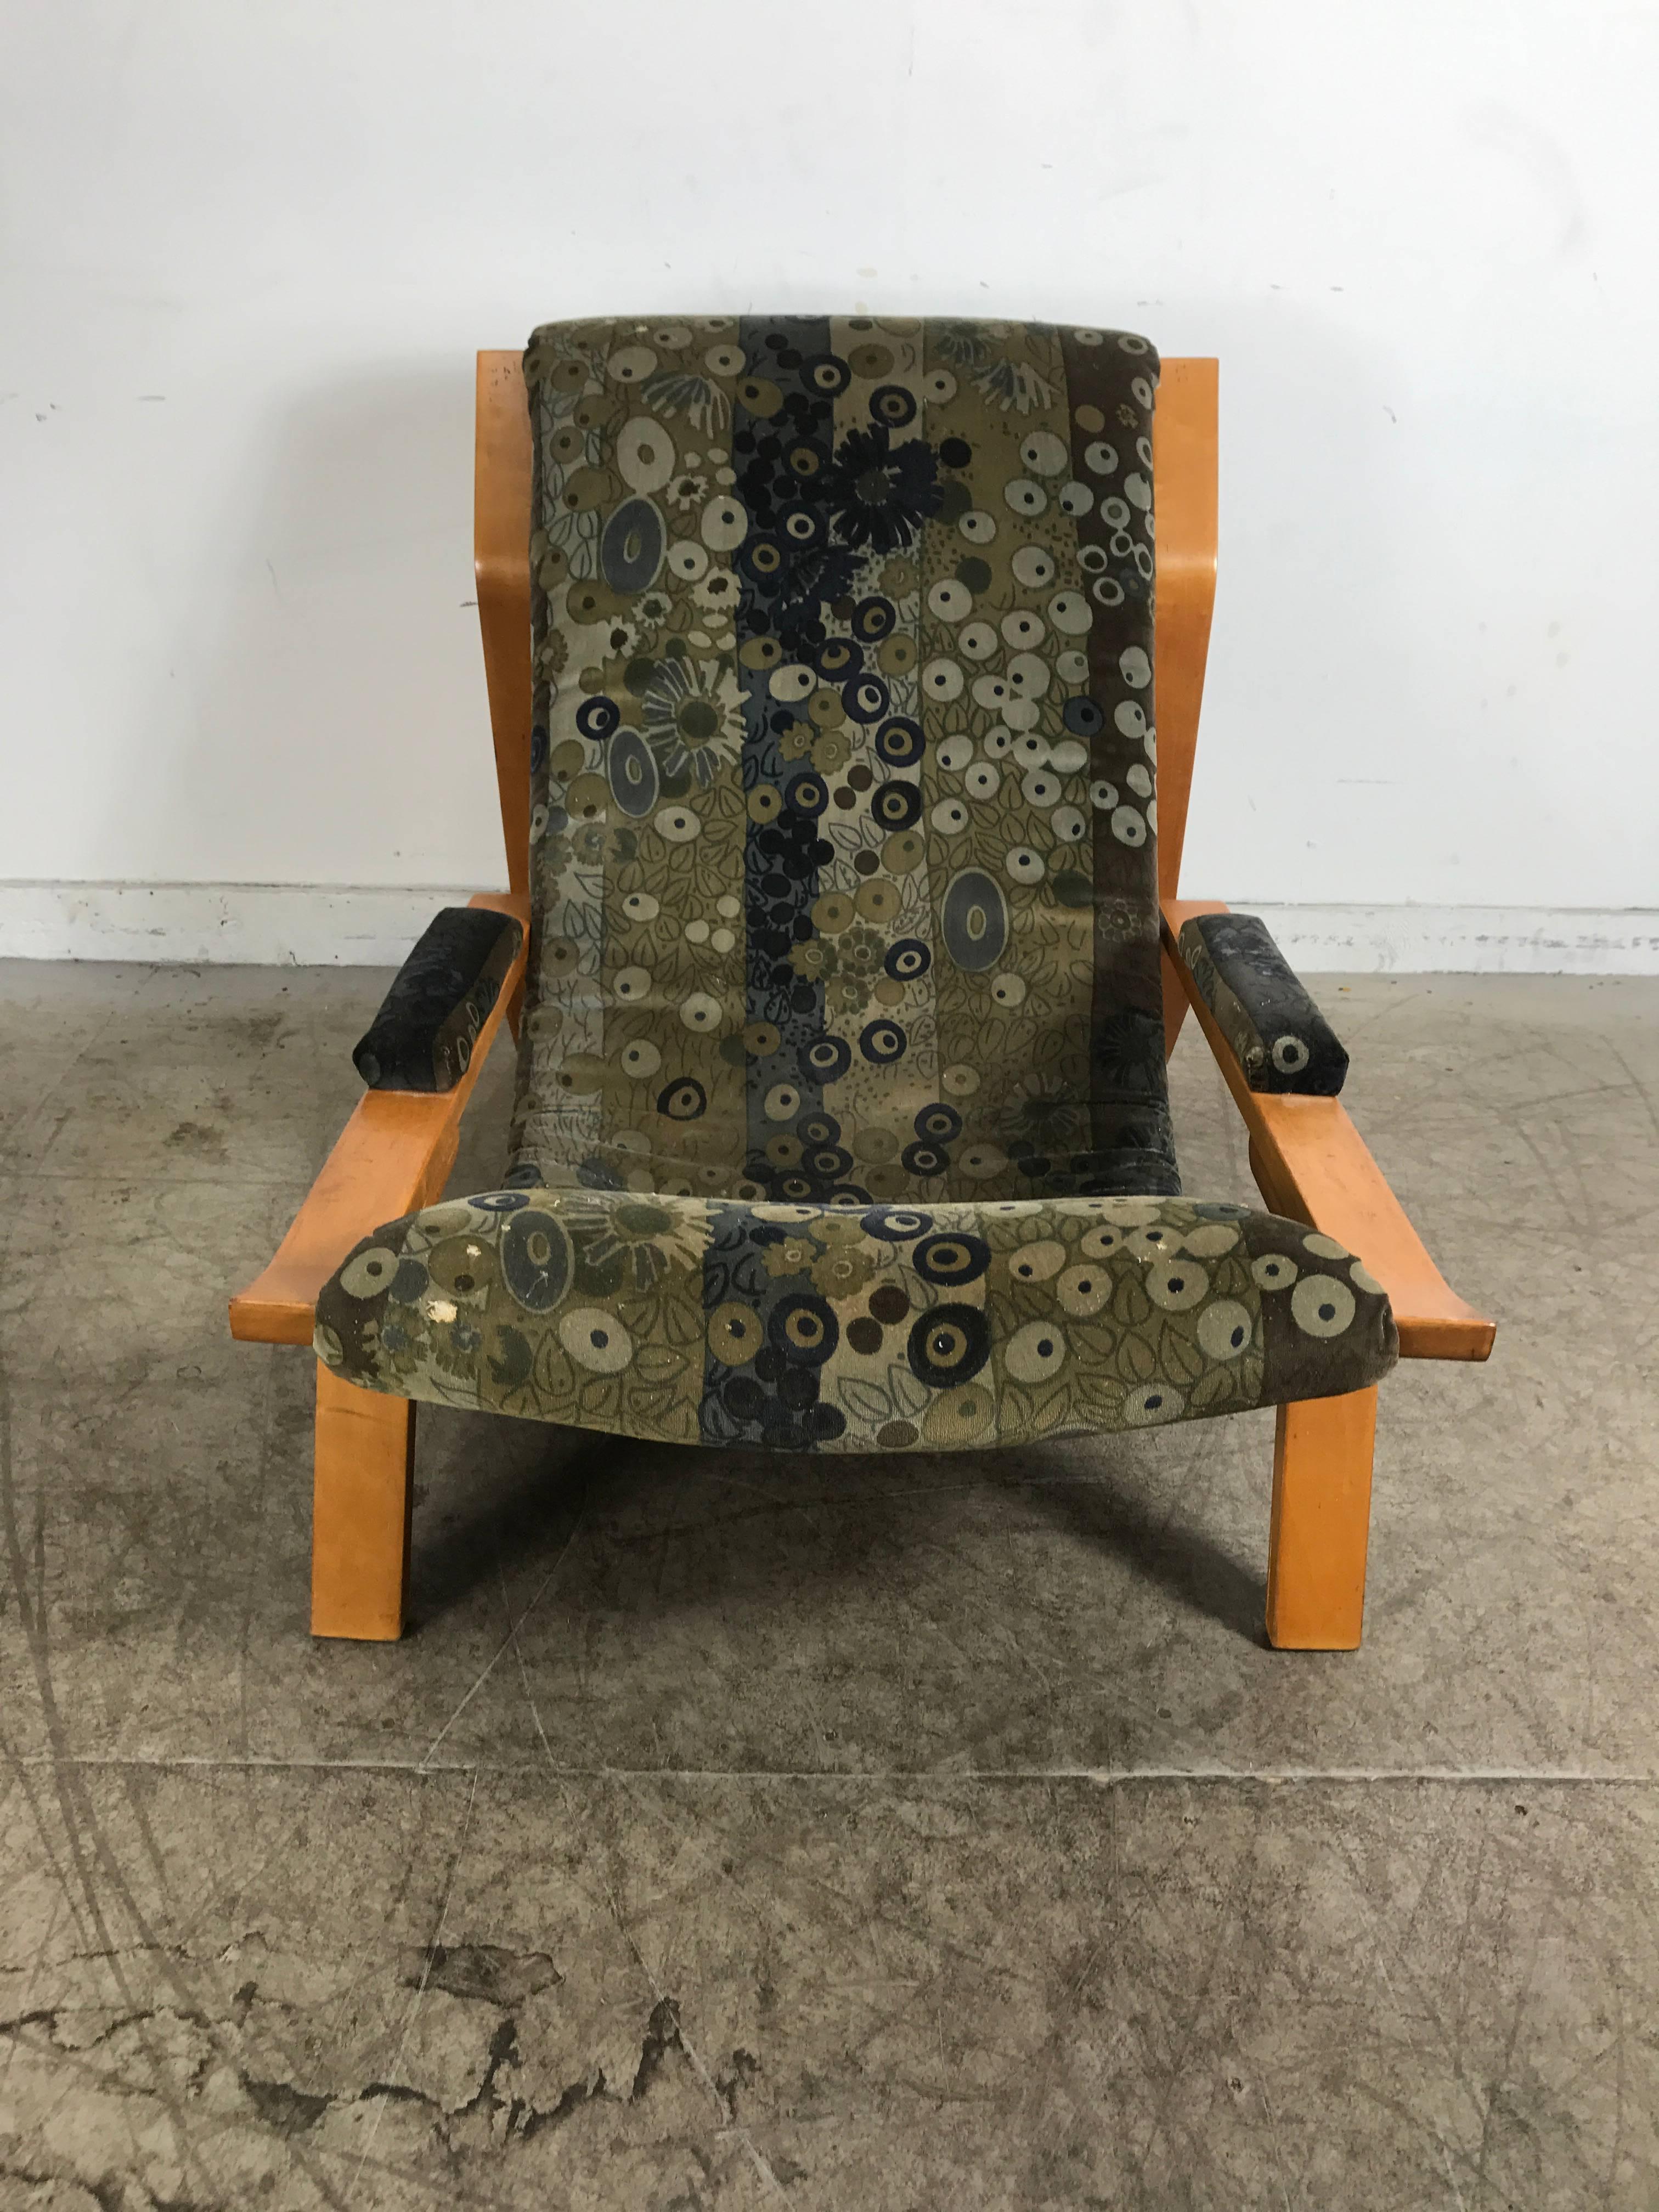 Rare Harvey Probber bentwood sling chair, circa 1948. Jack Lenor Larsen Fabric, Probber's bentwood sling lounge was awarded Best Design Museum of Modern Art 1948 stunning!